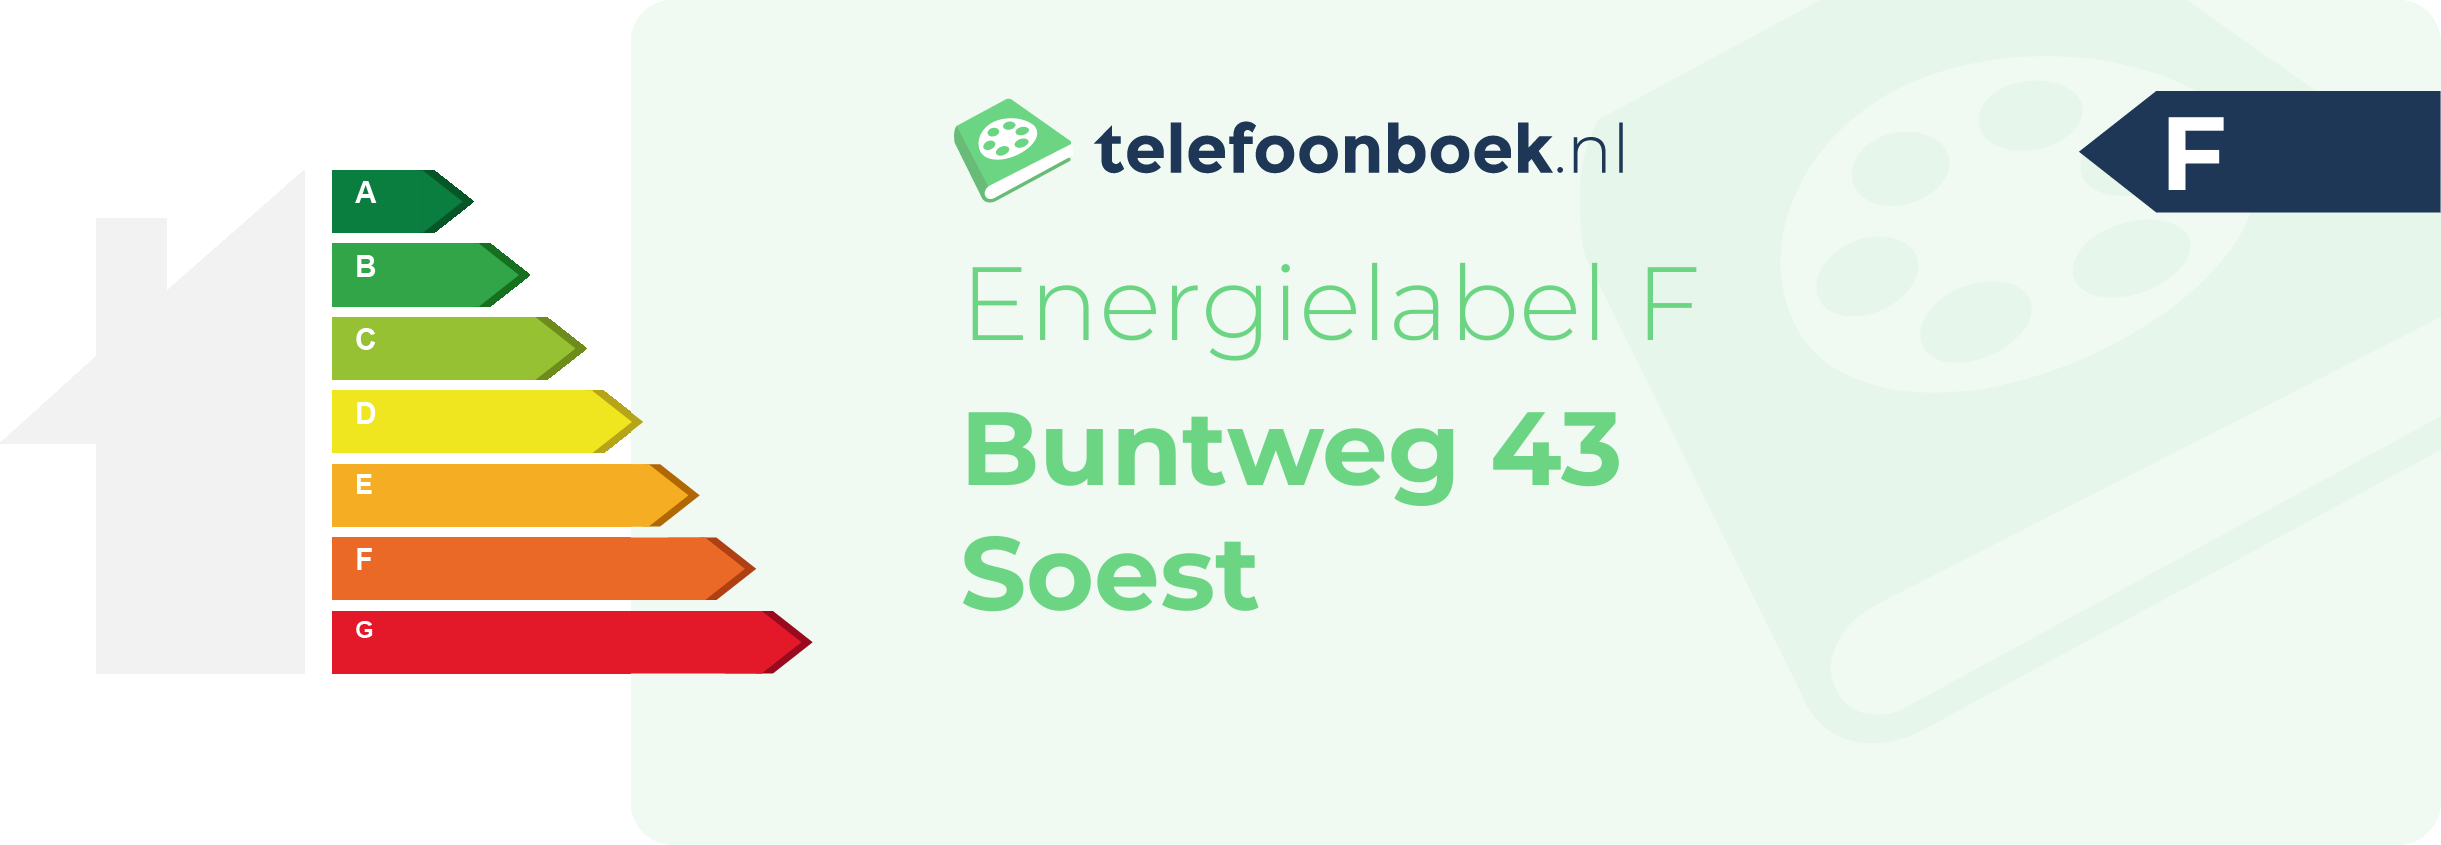 Energielabel Buntweg 43 Soest